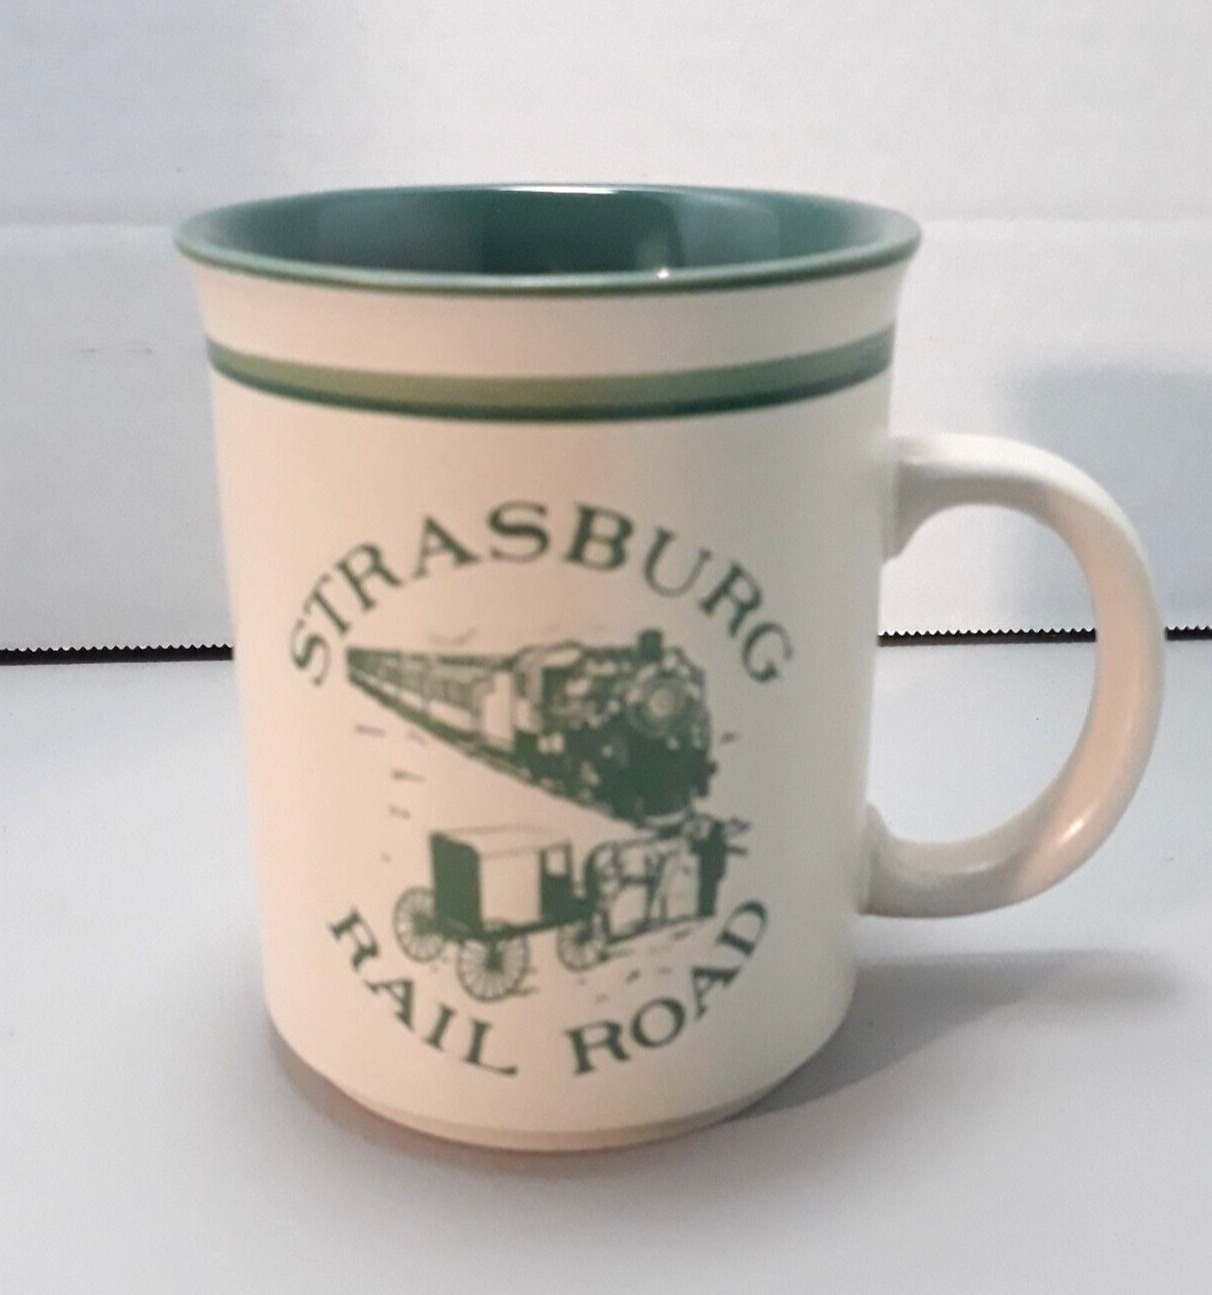 STRASBURG RAIL ROAD Railroad Coffee Cup Mug by Karol Western Made in Japan Train